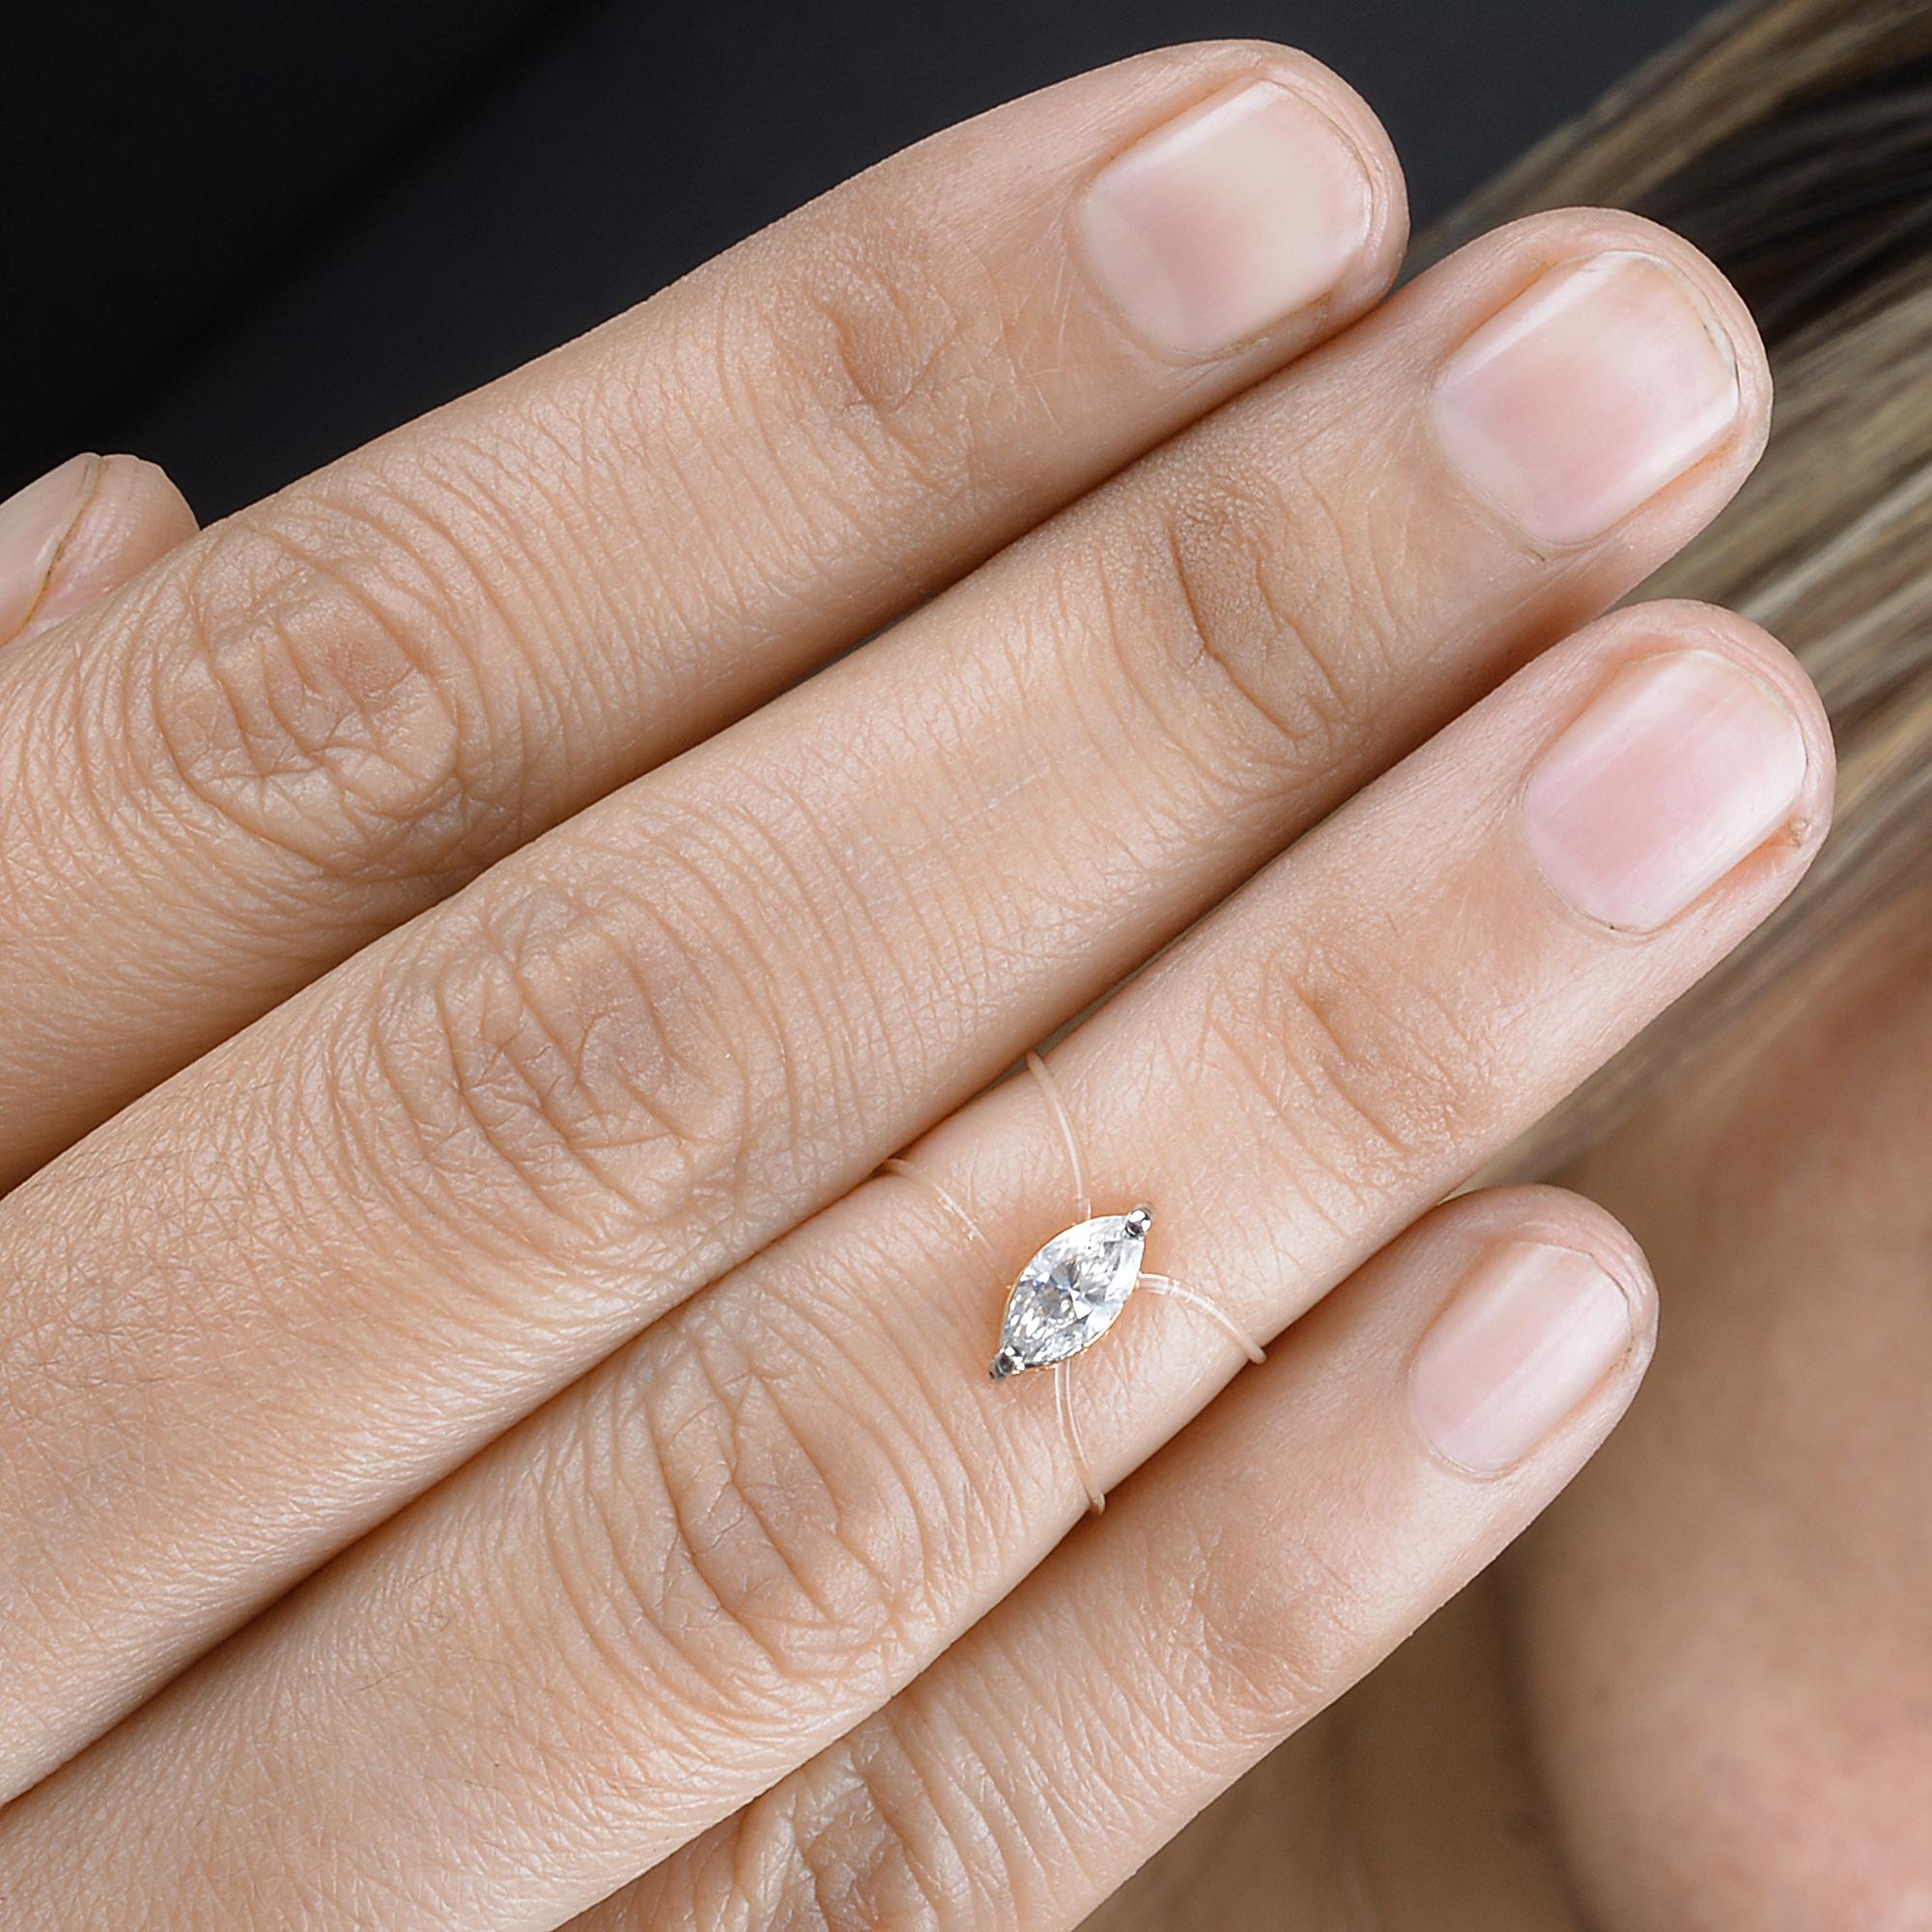 silicone diamond ring